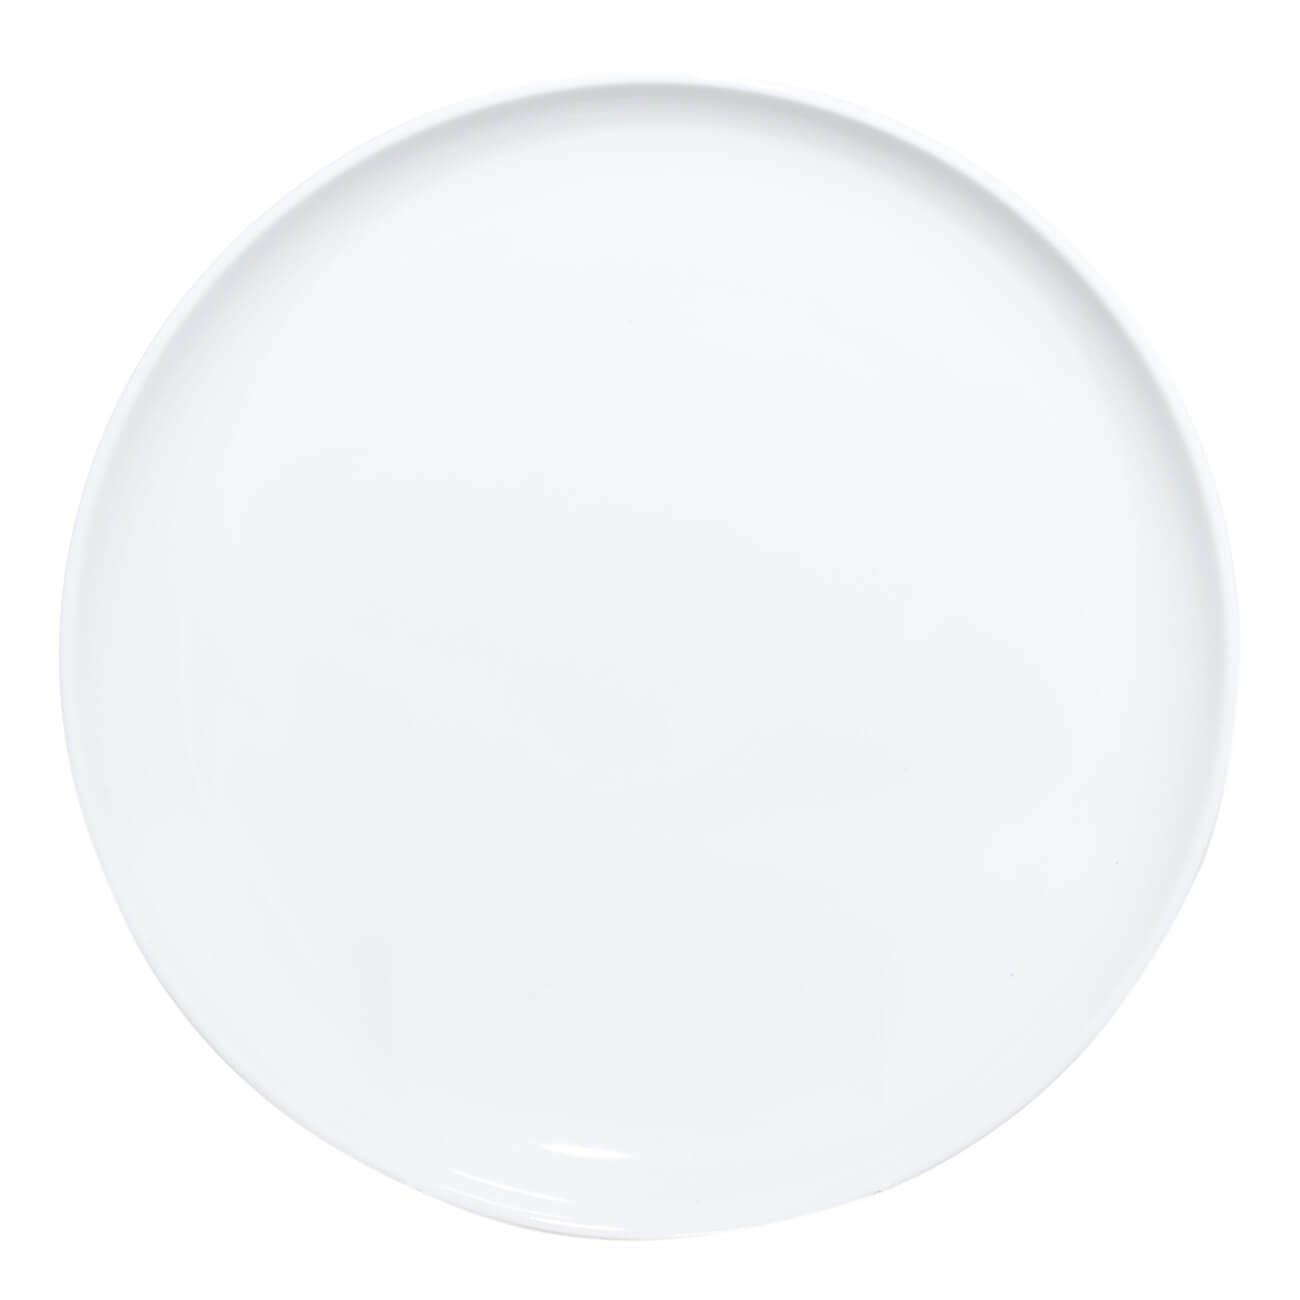 Тарелка обеденная, 25 см, фарфор P, белая, Silence kuchenland тарелка обеденная 26 см фарфор f белая ideal white